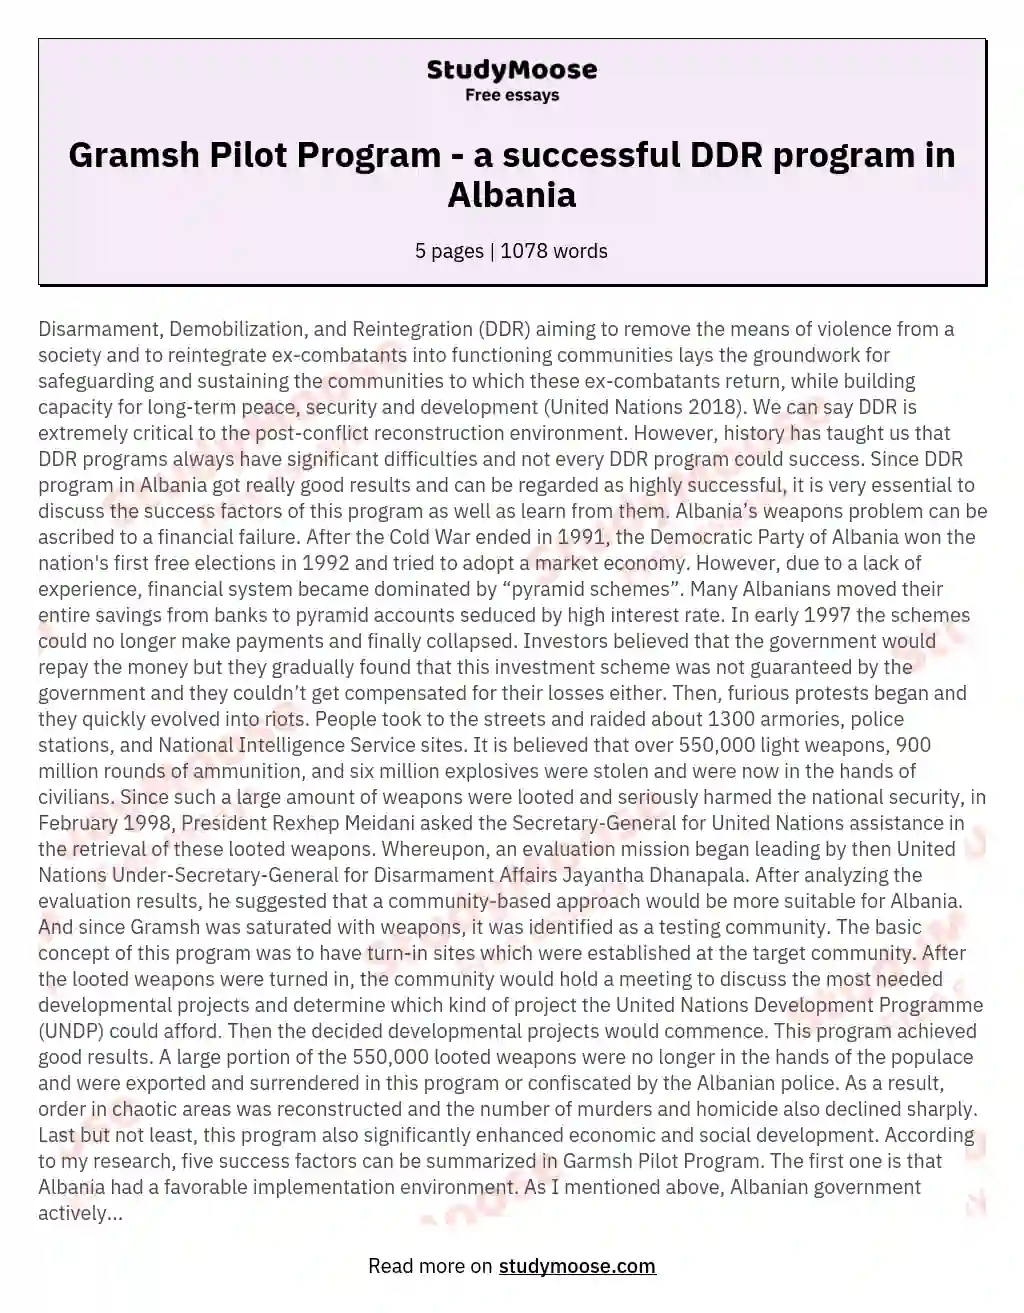 Gramsh Pilot Program - a successful DDR program in Albania essay